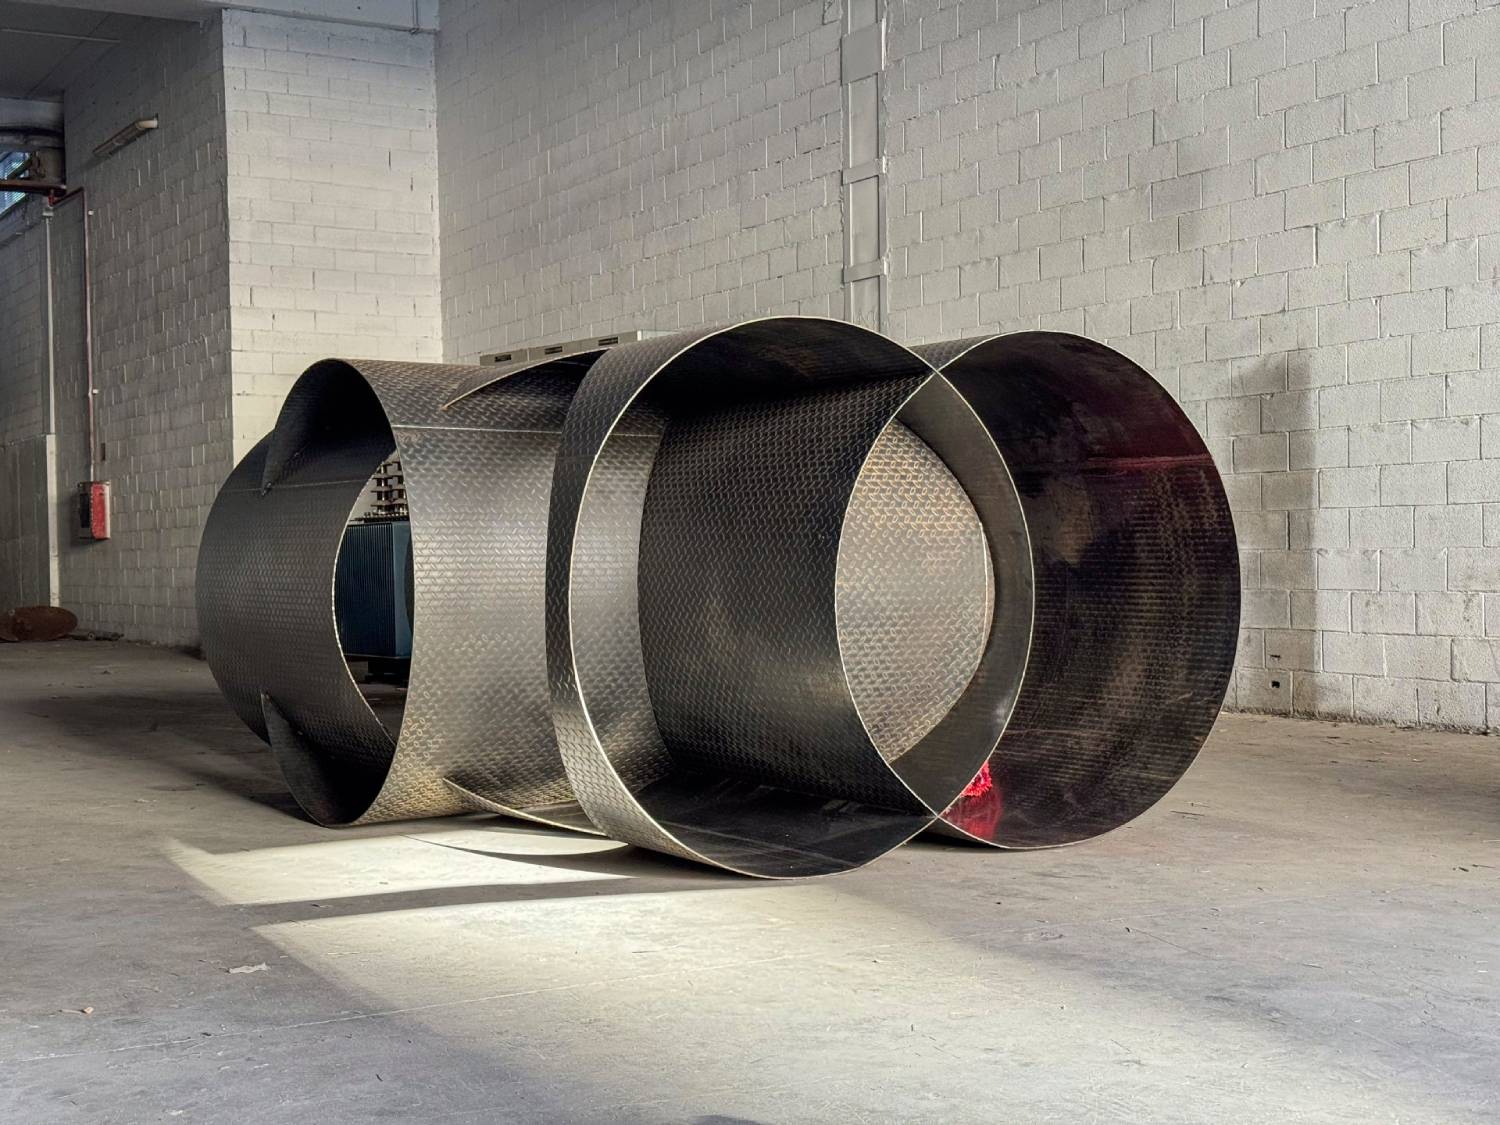 Los vasos comunicantes de June Crespo en el Guggenheim de Bilbao